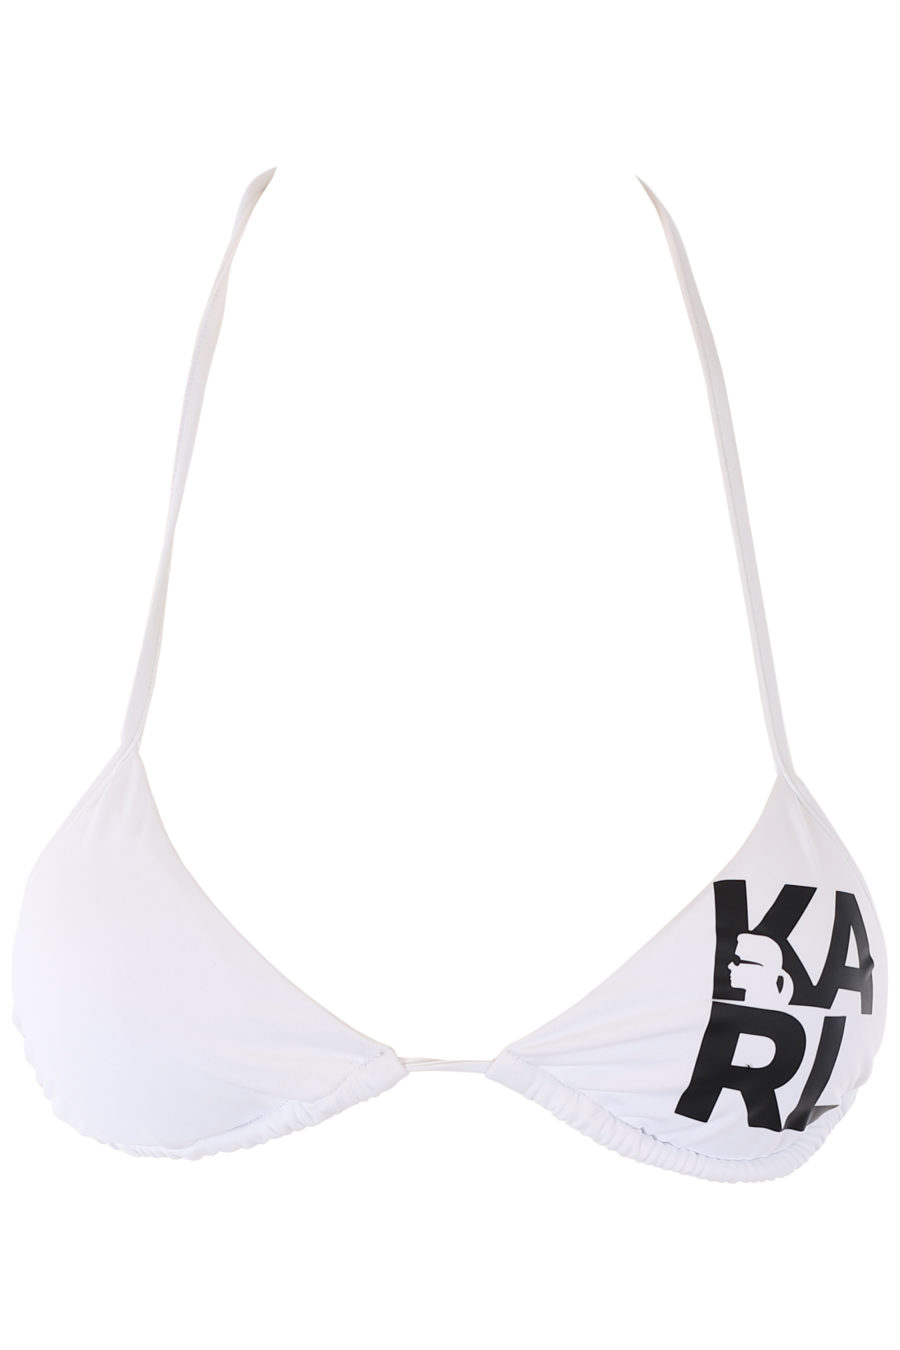 Haut de bikini blanc avec logo noir - IMG 1201